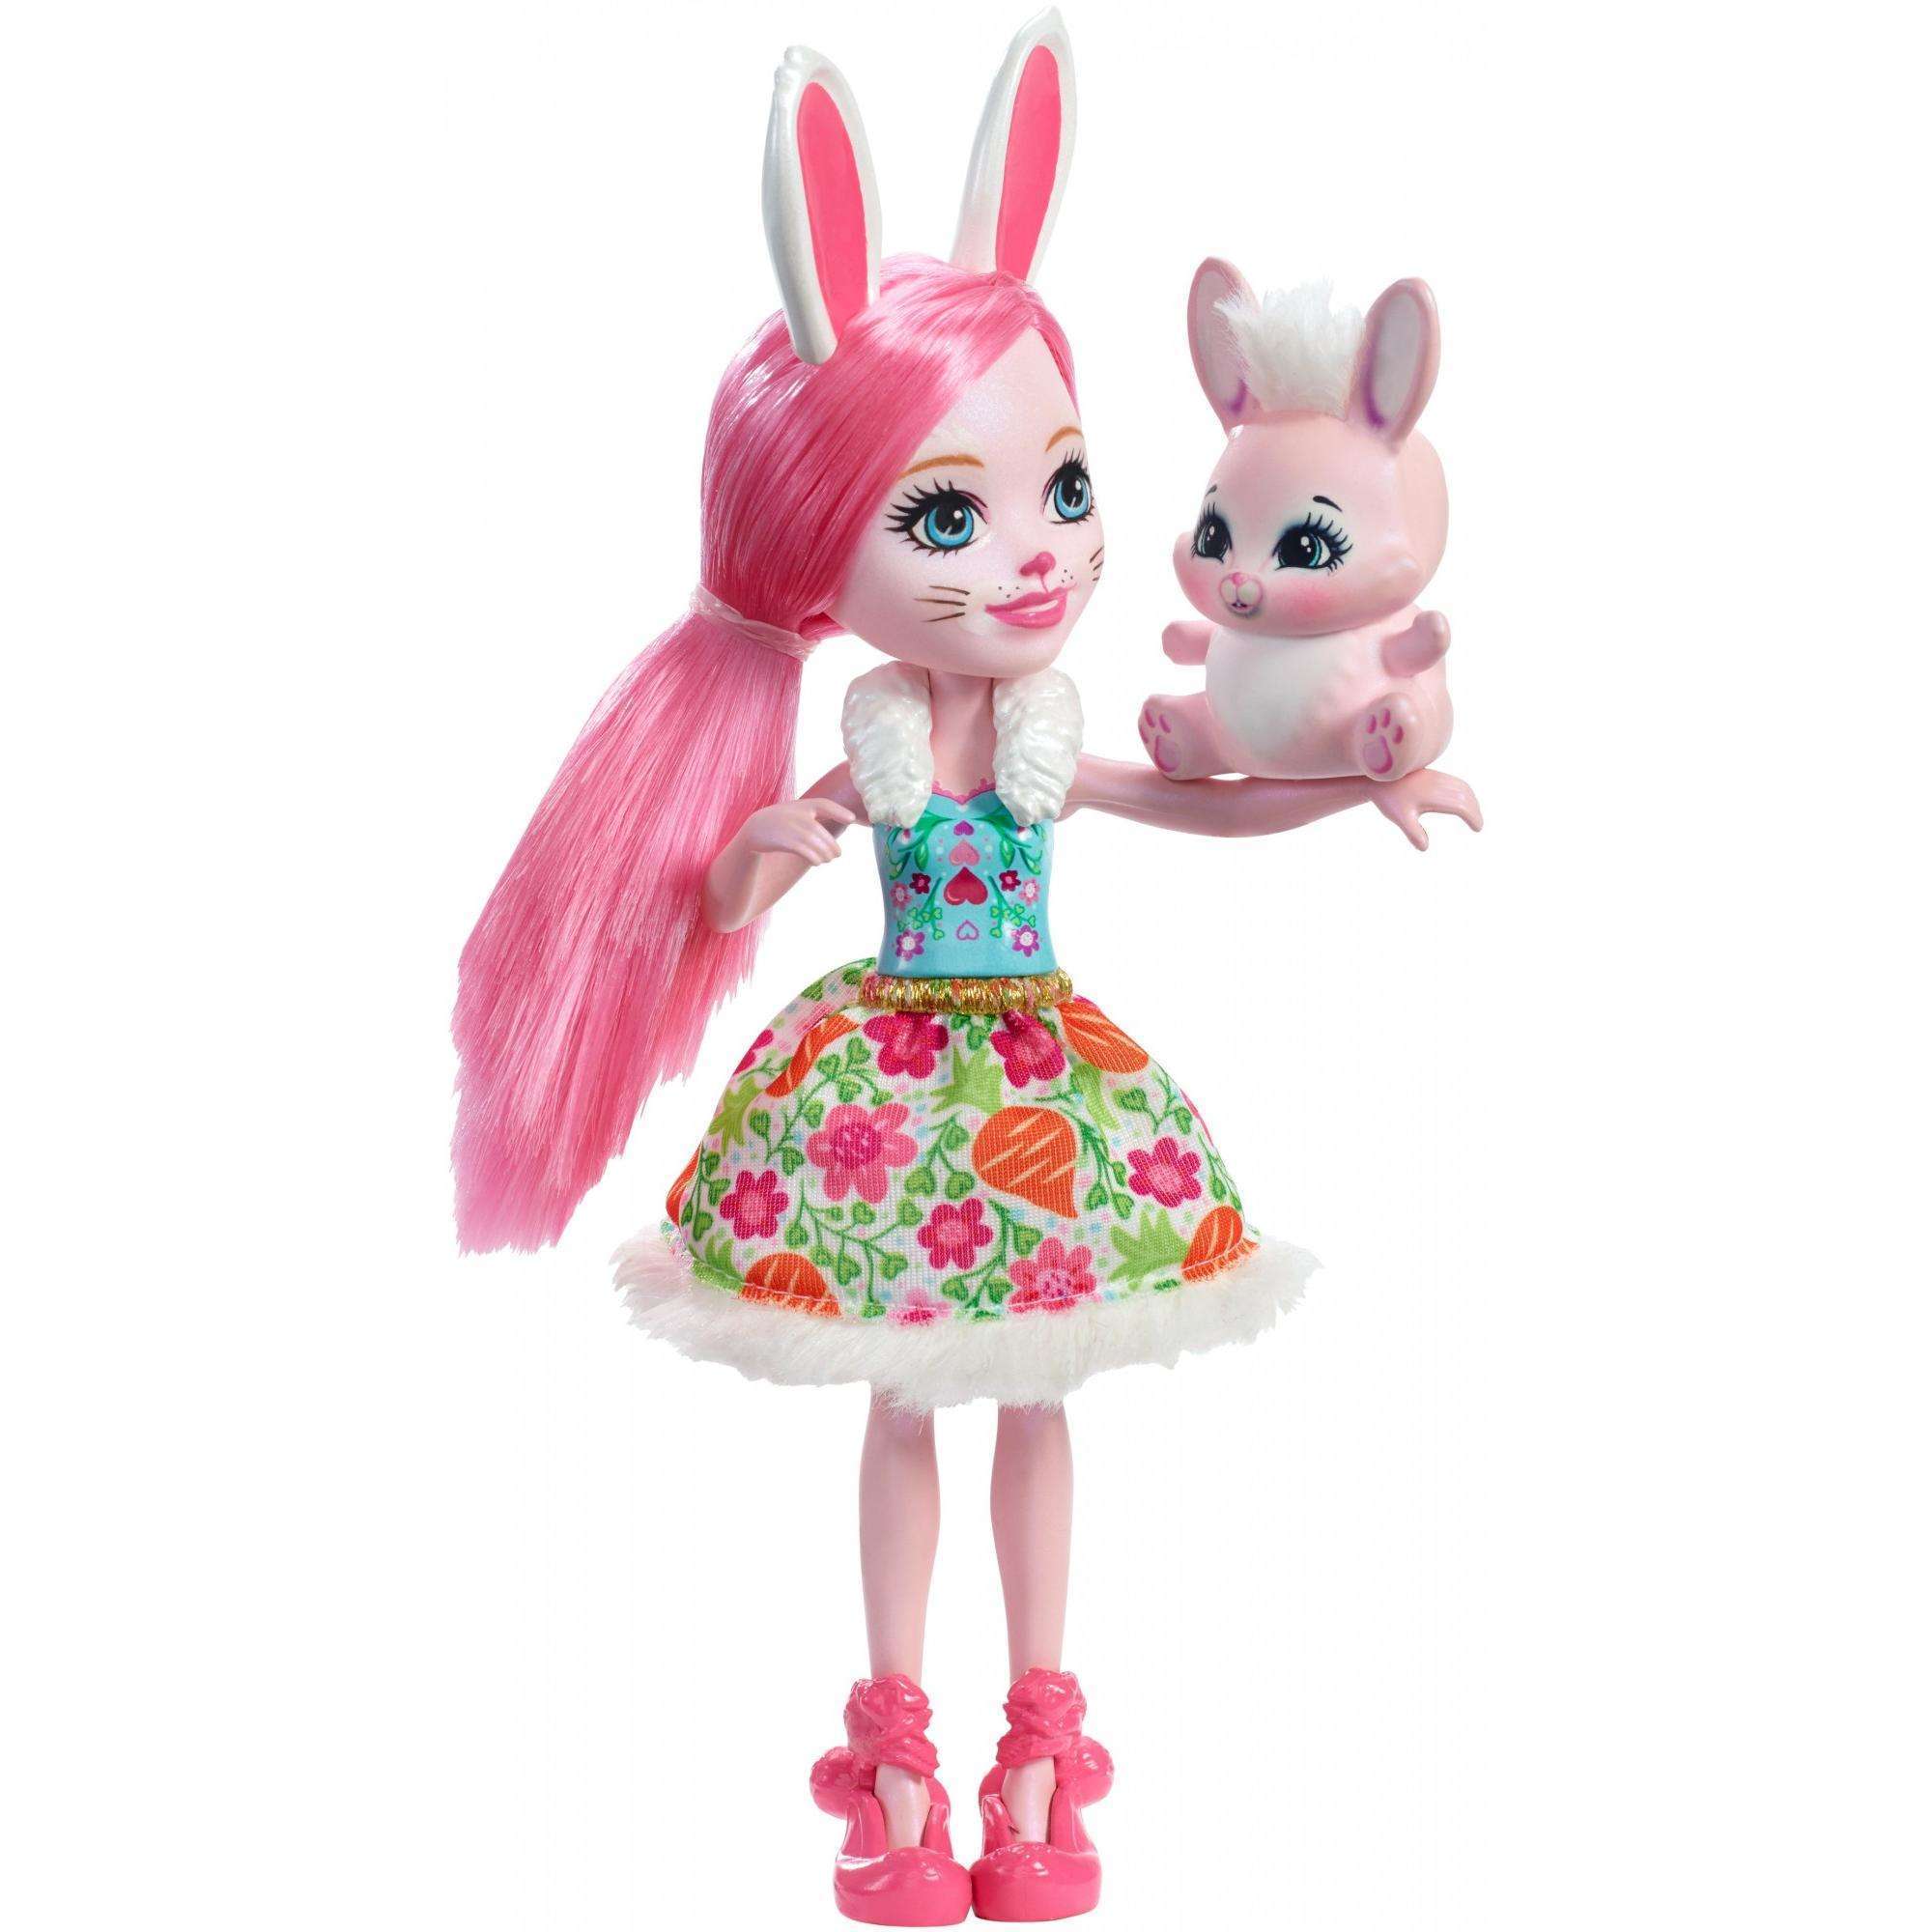 Enchantimals Bree Bunny Doll - image 1 of 6